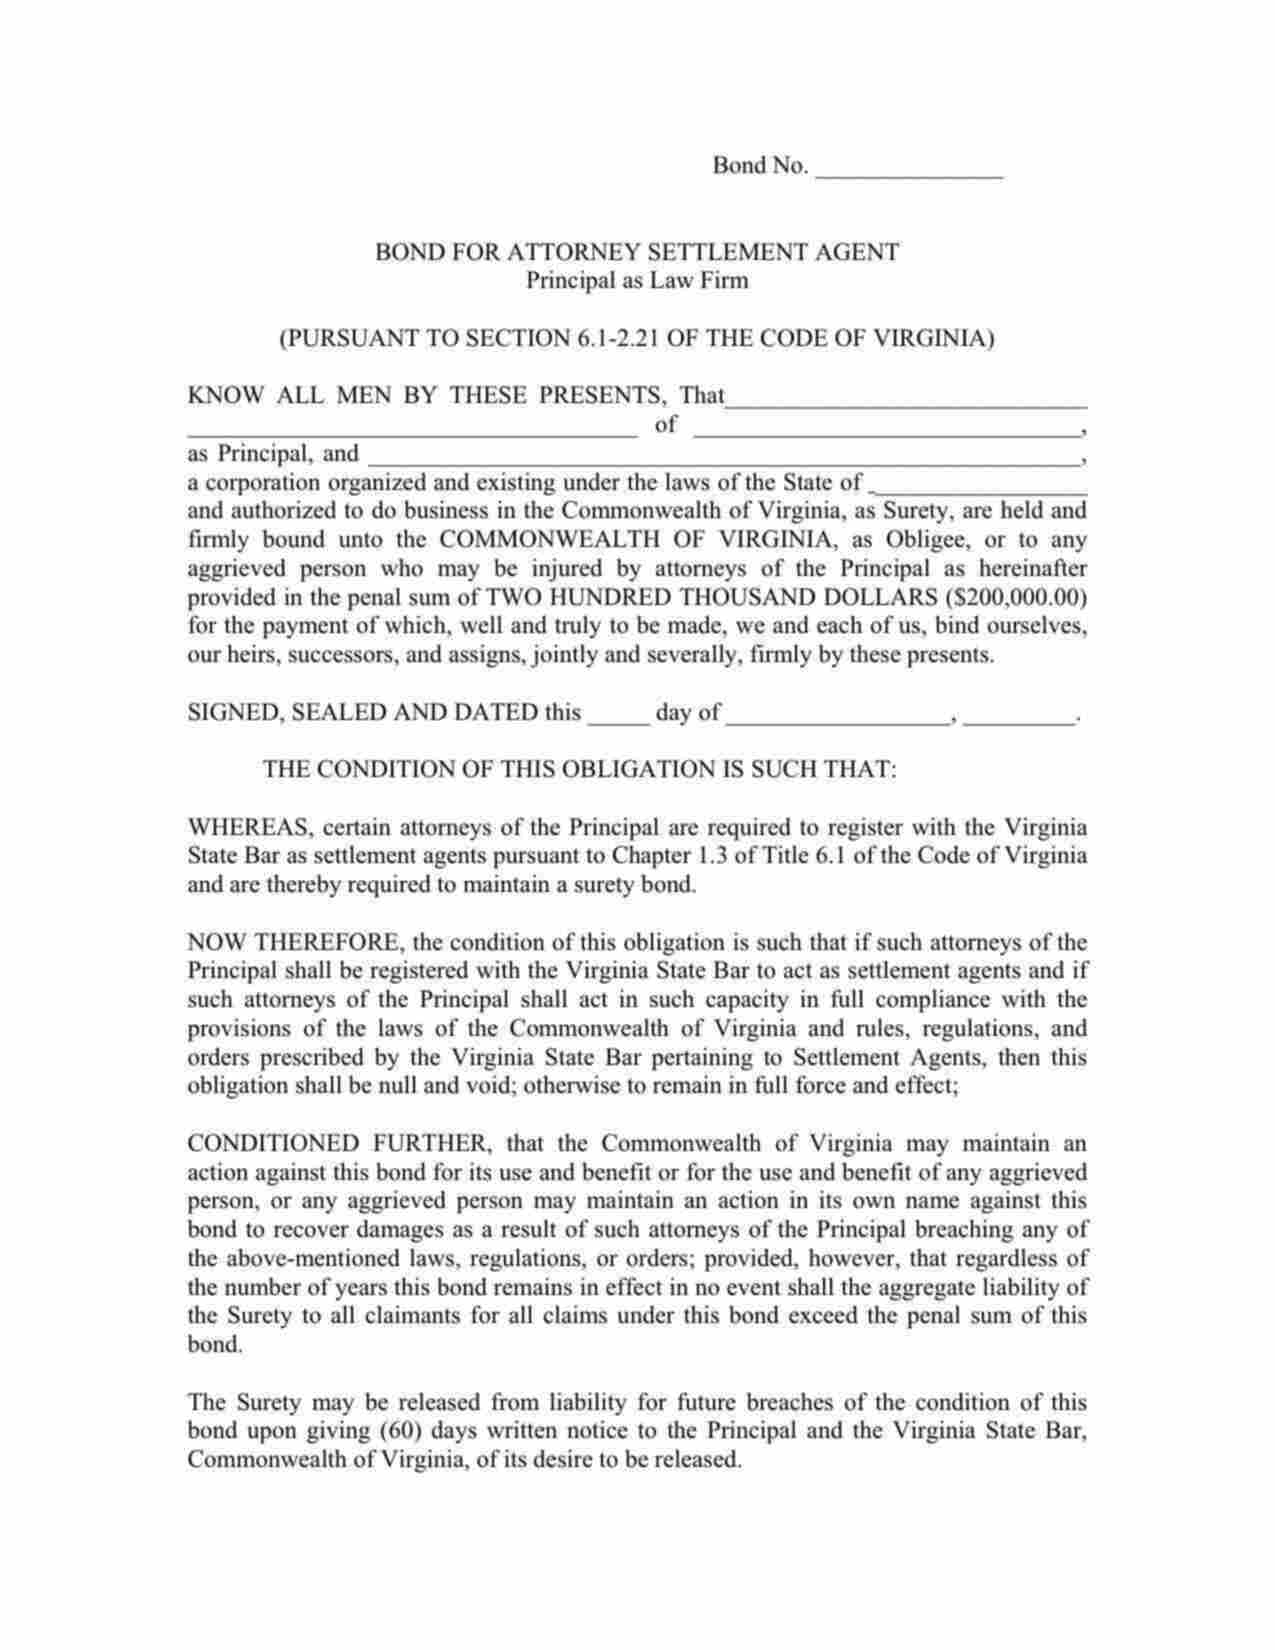 Virginia Attorney Settlement Agent - Law Firm Bond Form